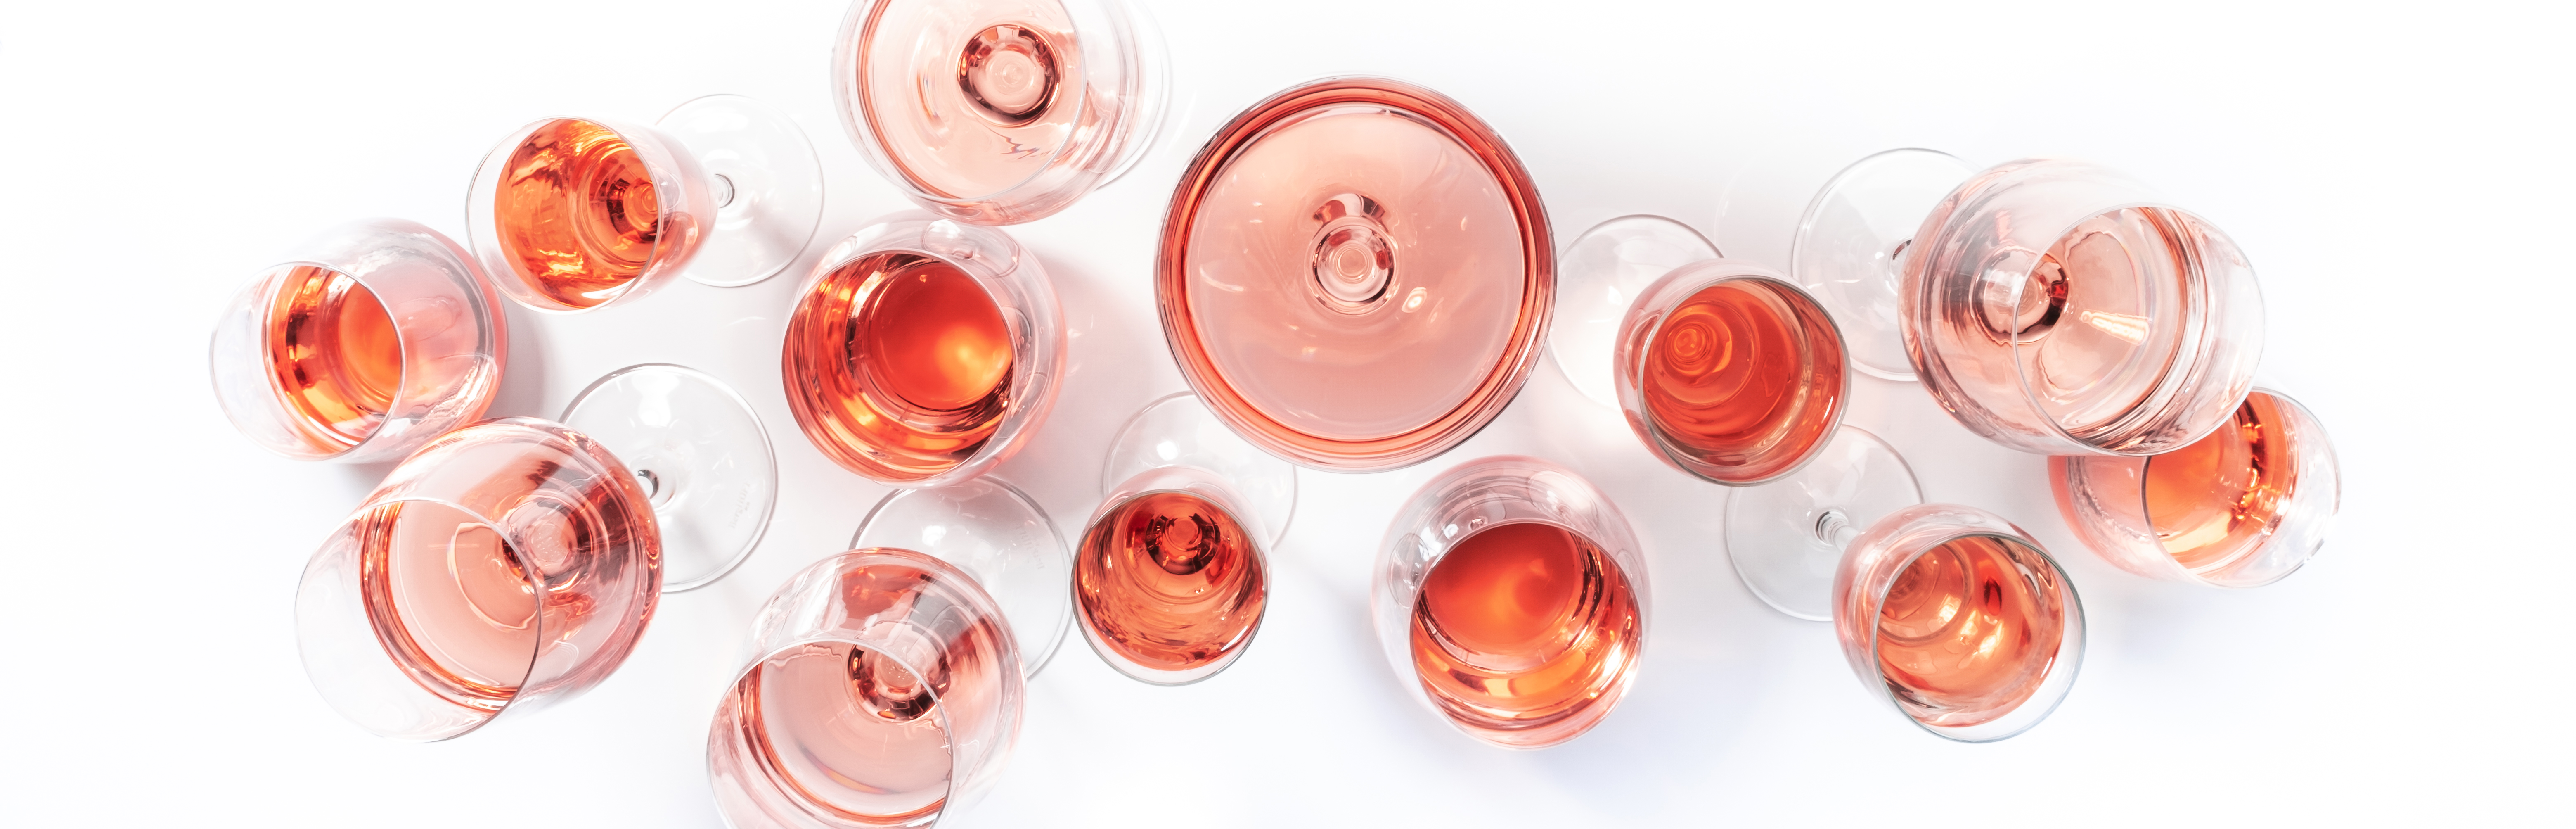 Rose wine glasses on wine tasting. Degustation different varieties of pink wine concept